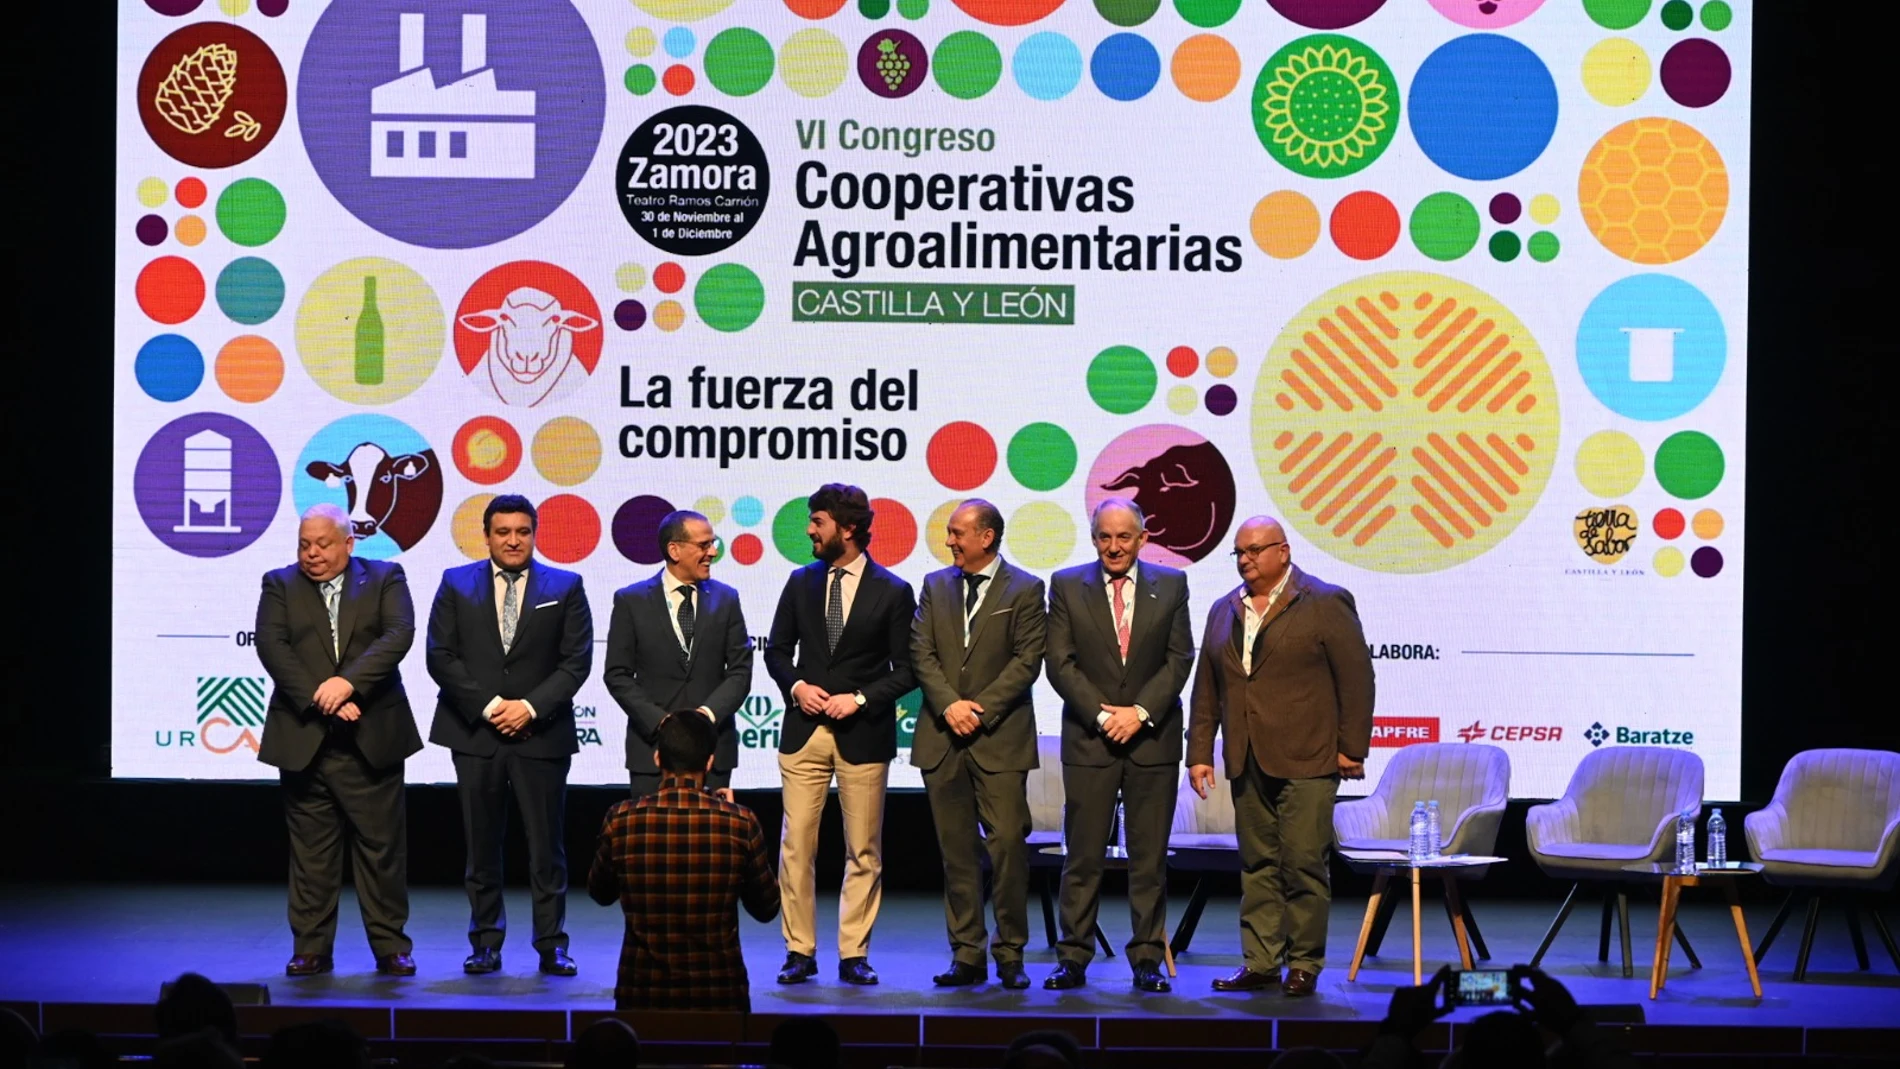 VI Congreso de Cooperativas Agroalimentarias